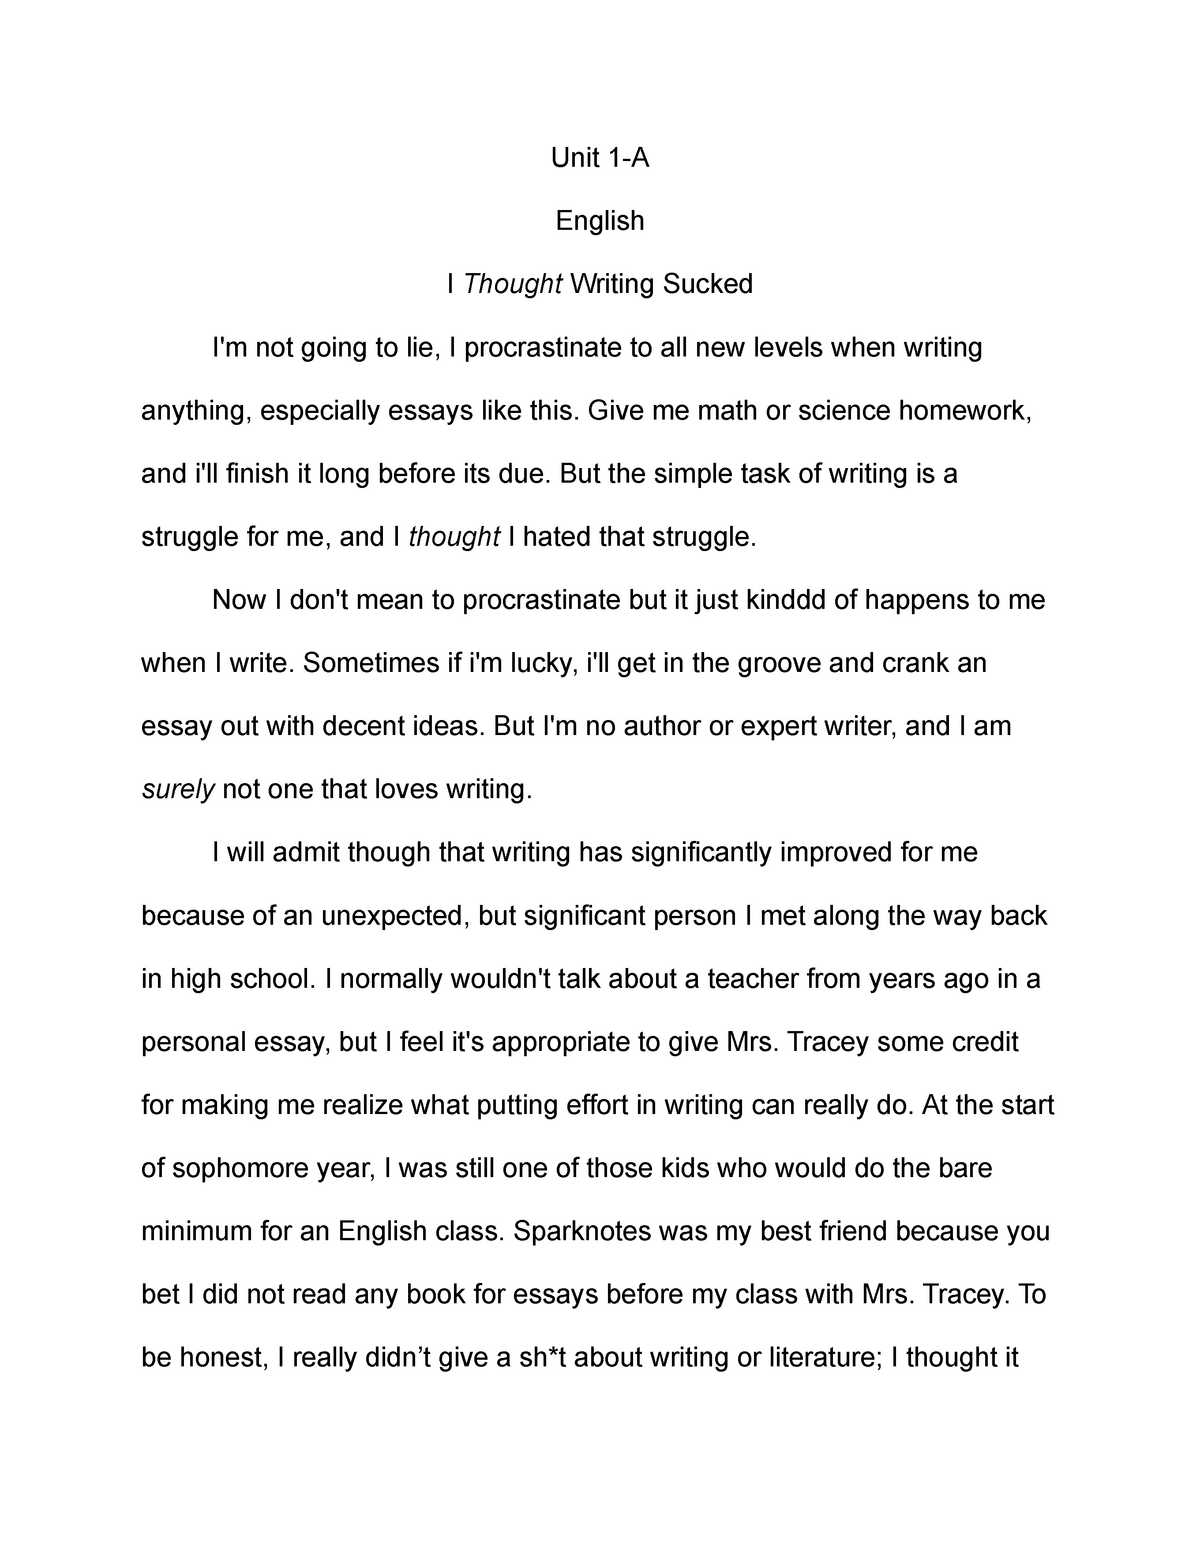 essay writing for english literature sucks